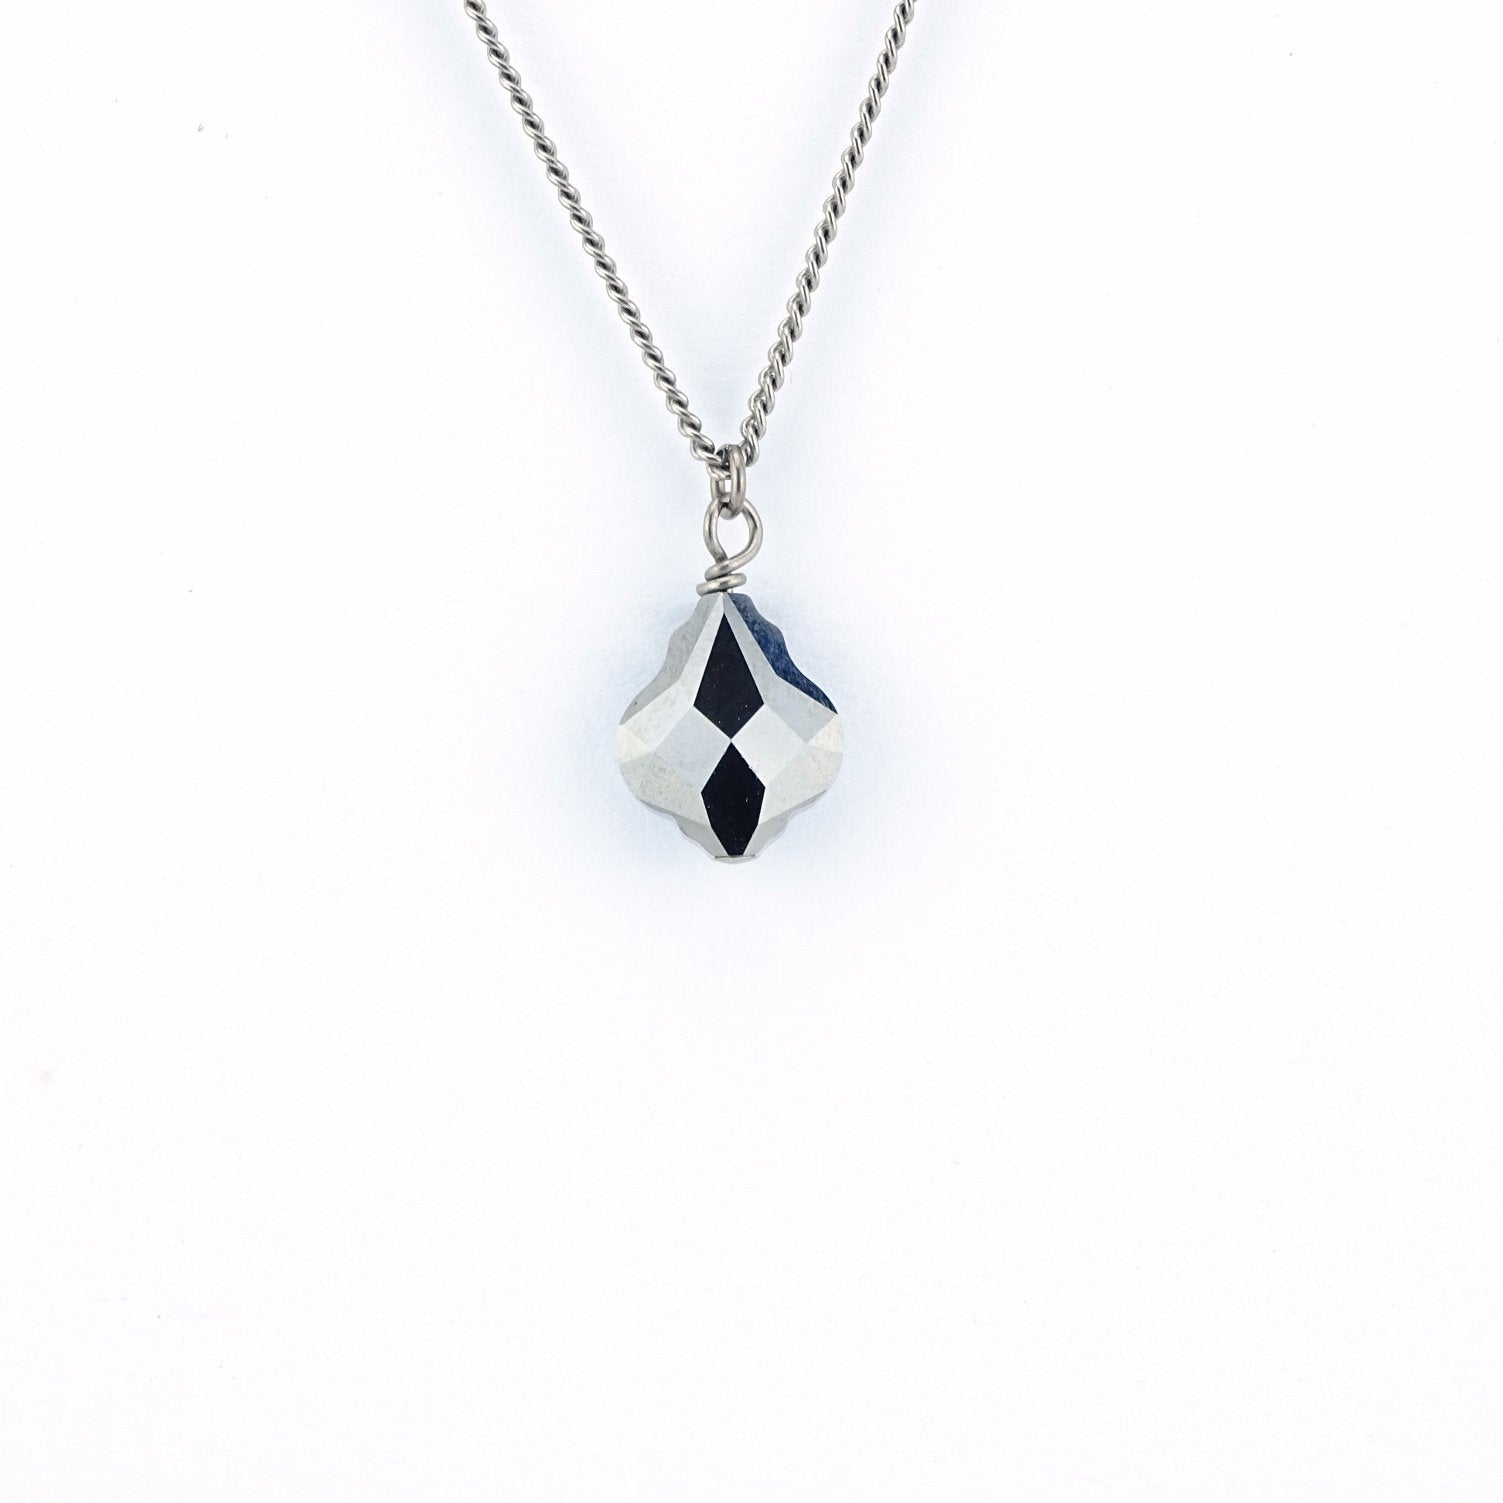 Silver Night Baroque Swarovski Crystal Titanium Necklace, Pure Titanium Chain Necklace For Sensitive Skin Hypoallergenic Nickel Free Niobium